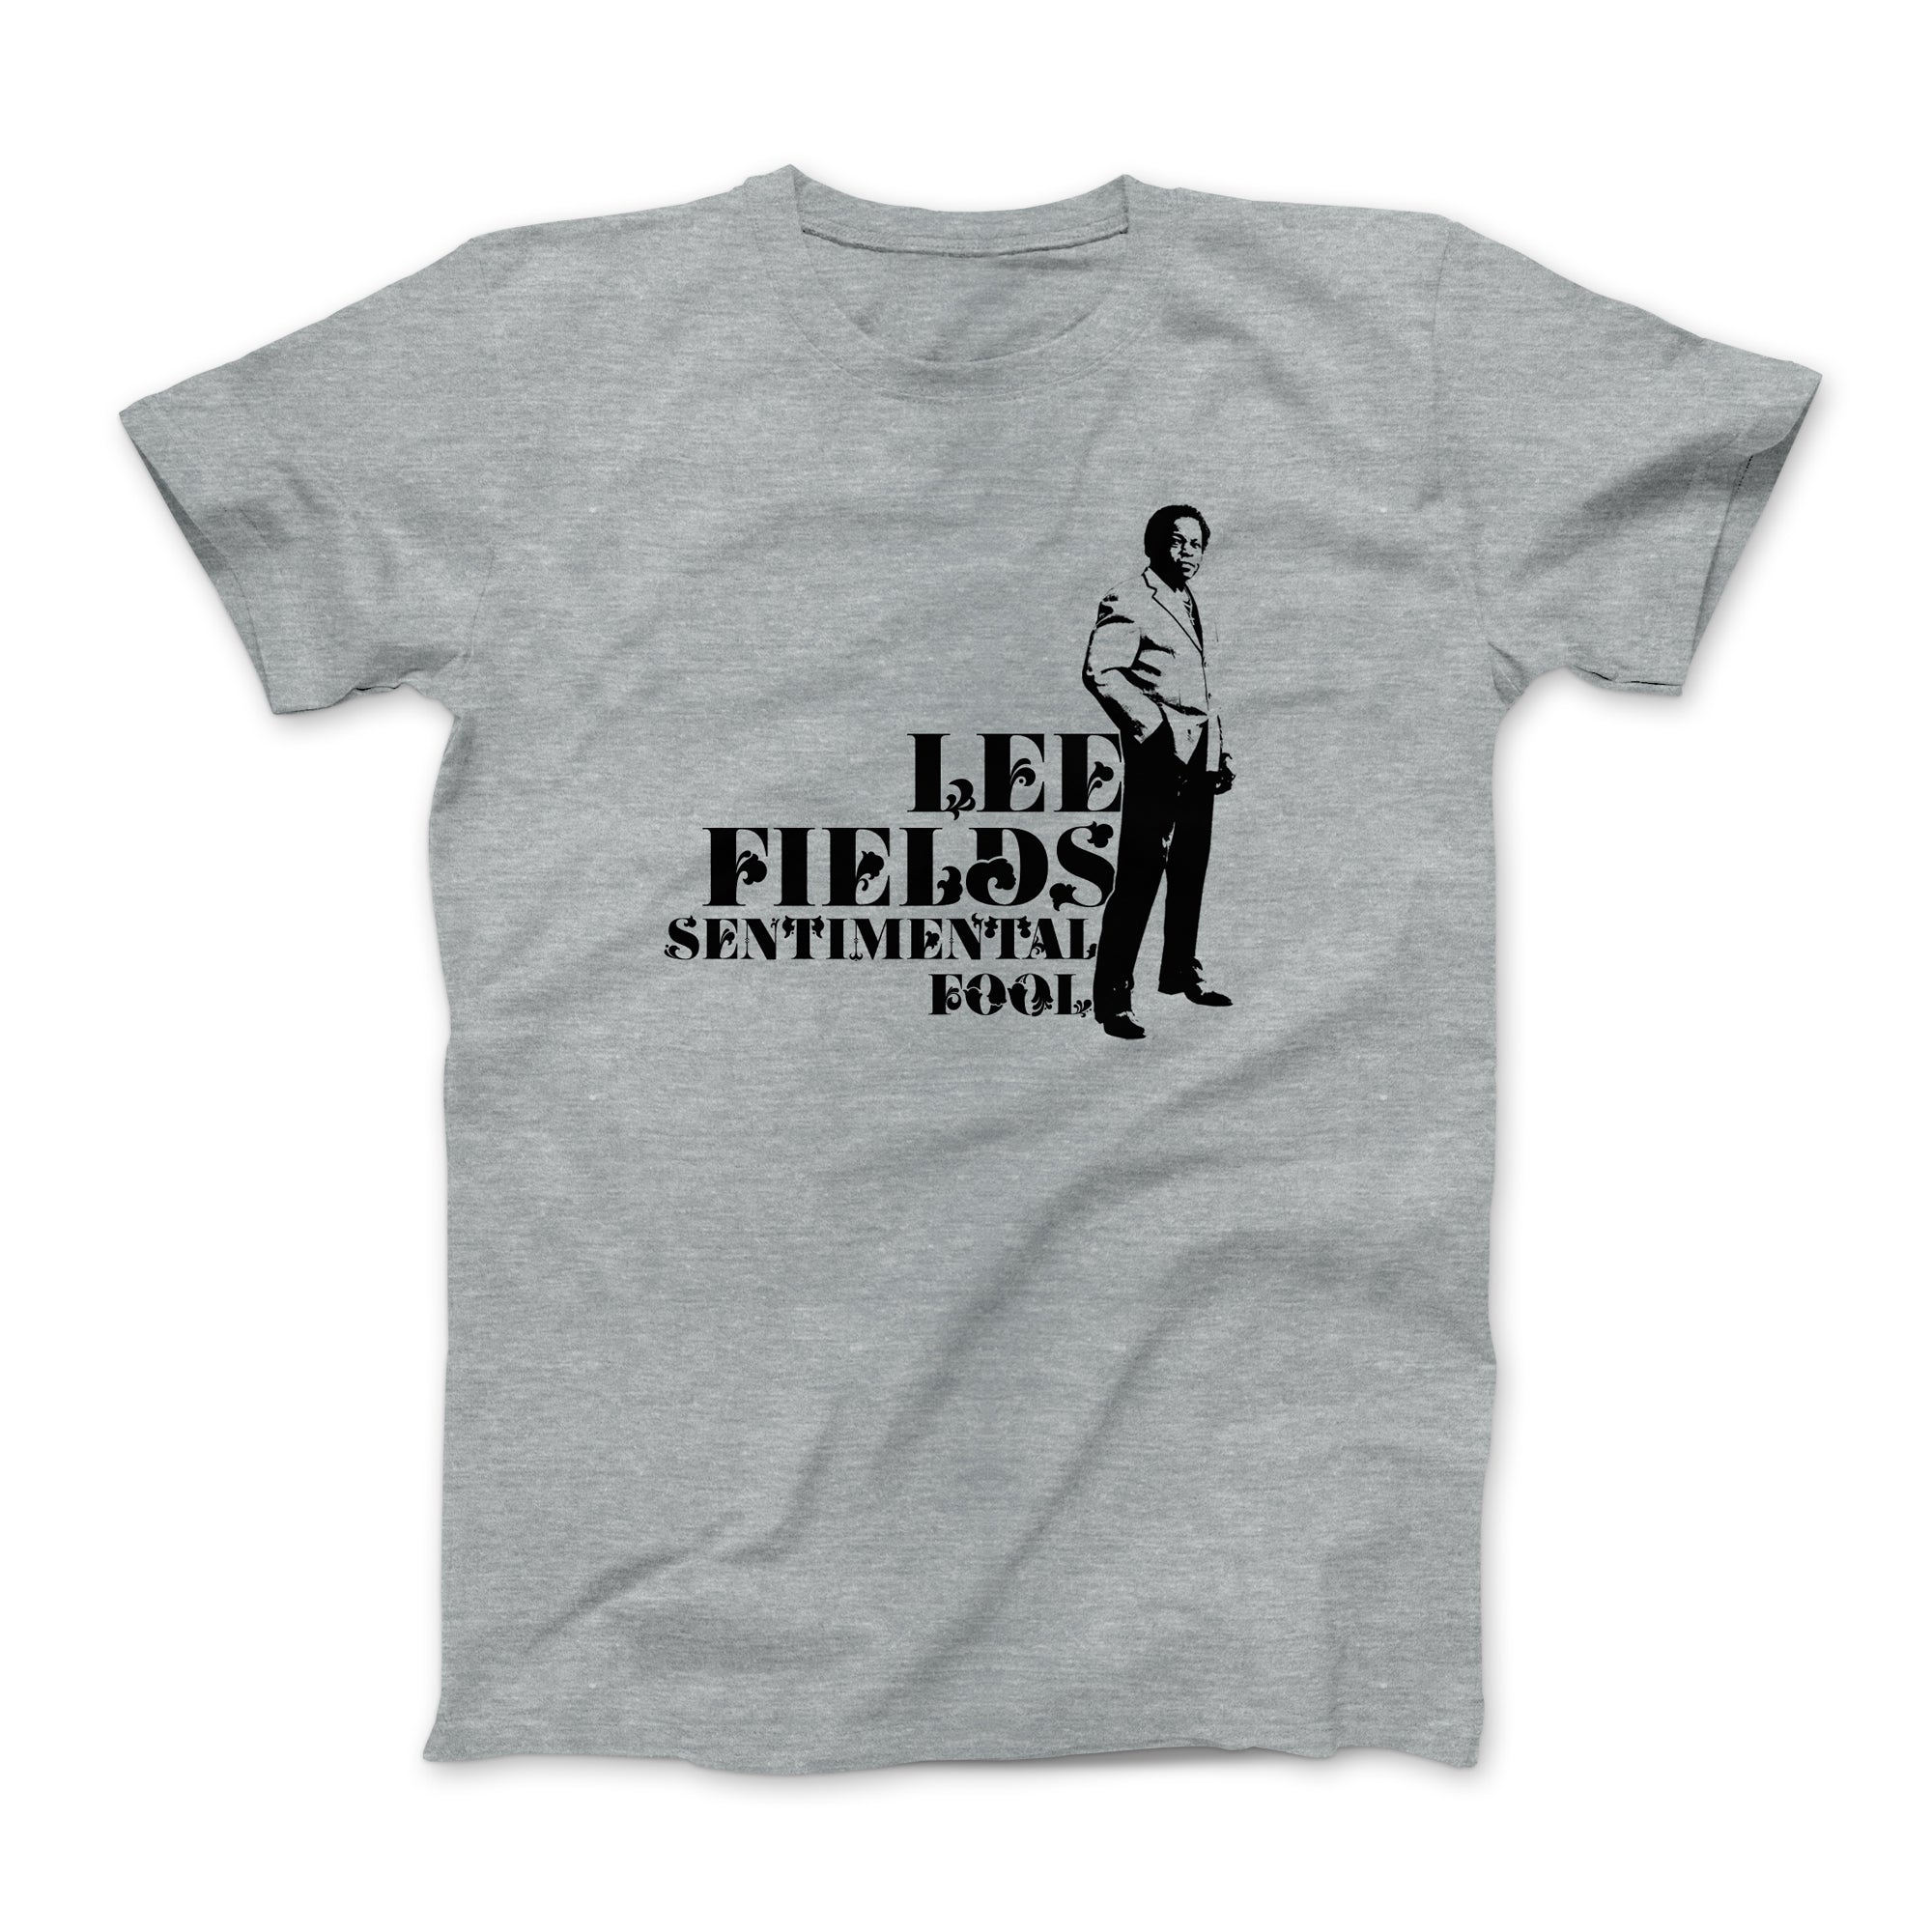 Lee Fields Sentimental Fool Tshirt